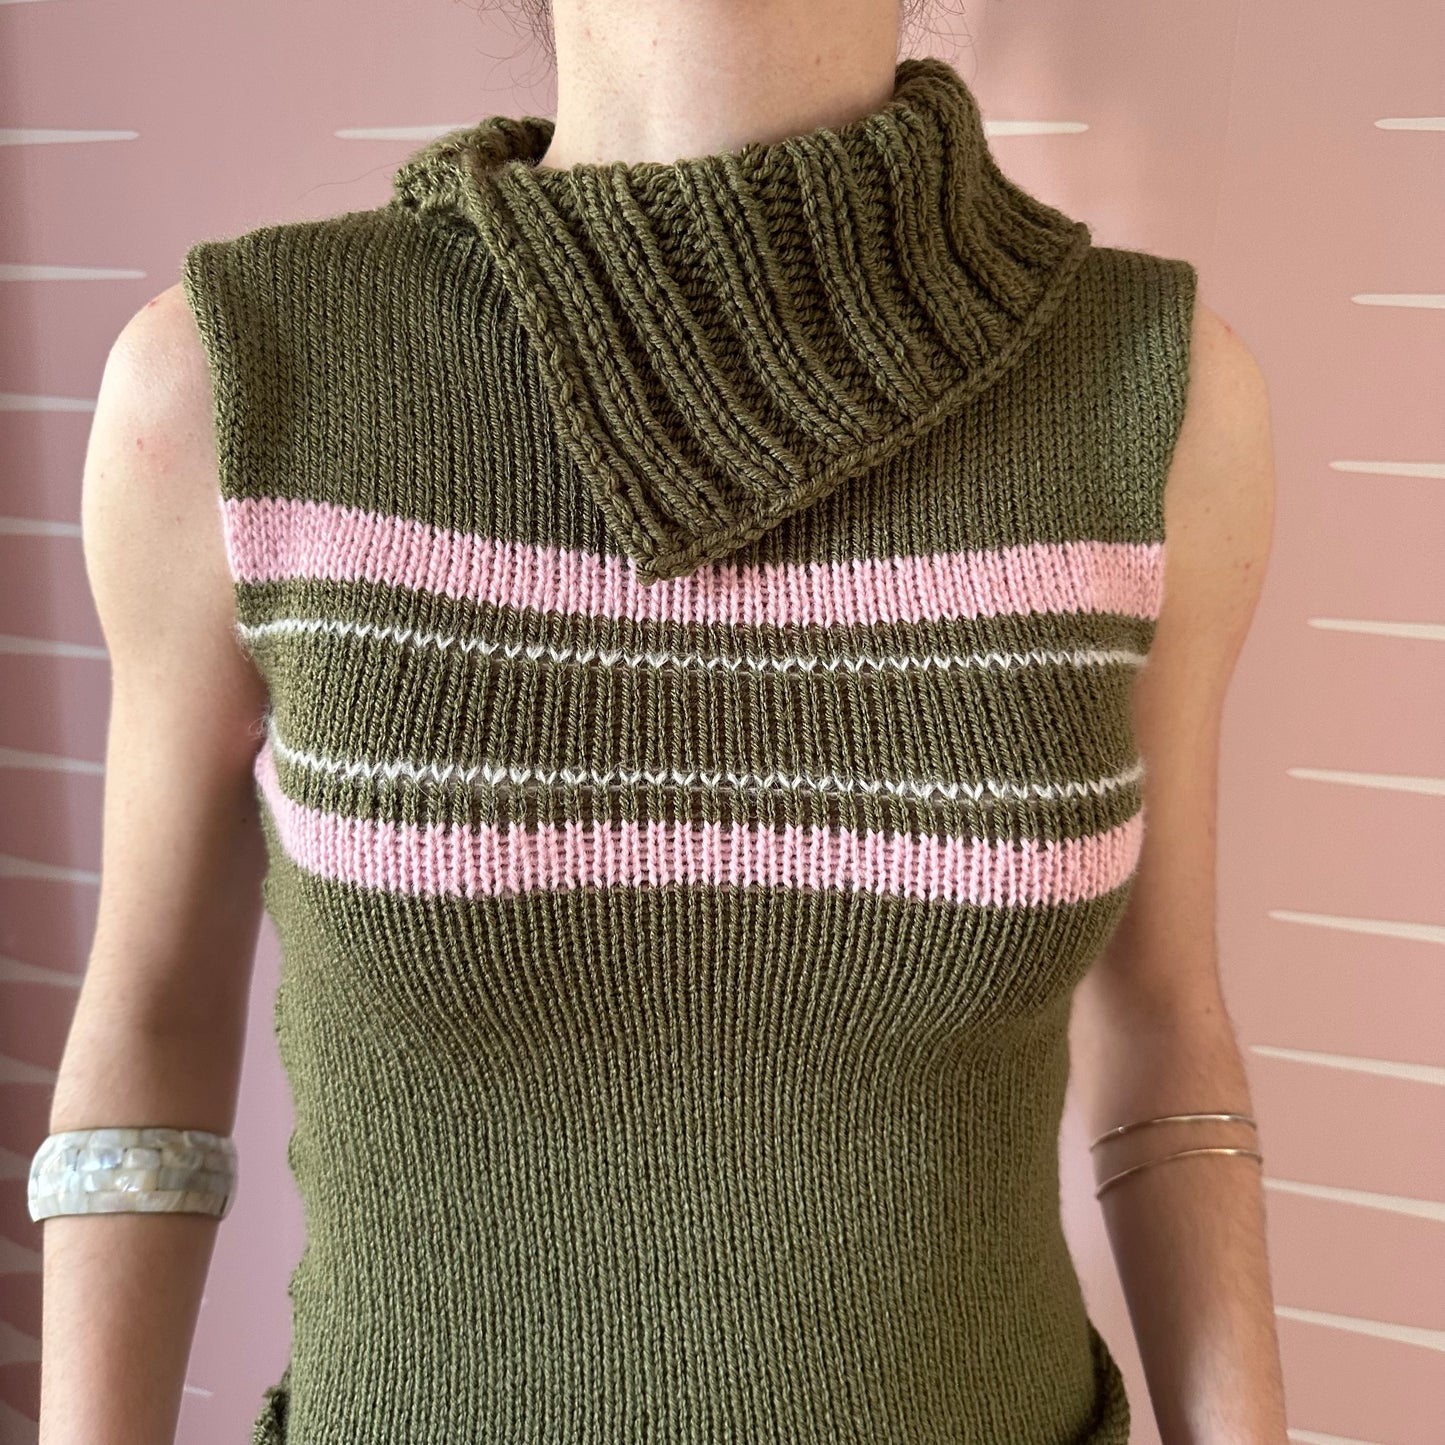 The Jade Set - matching turtleneck knit vest and mini skirt